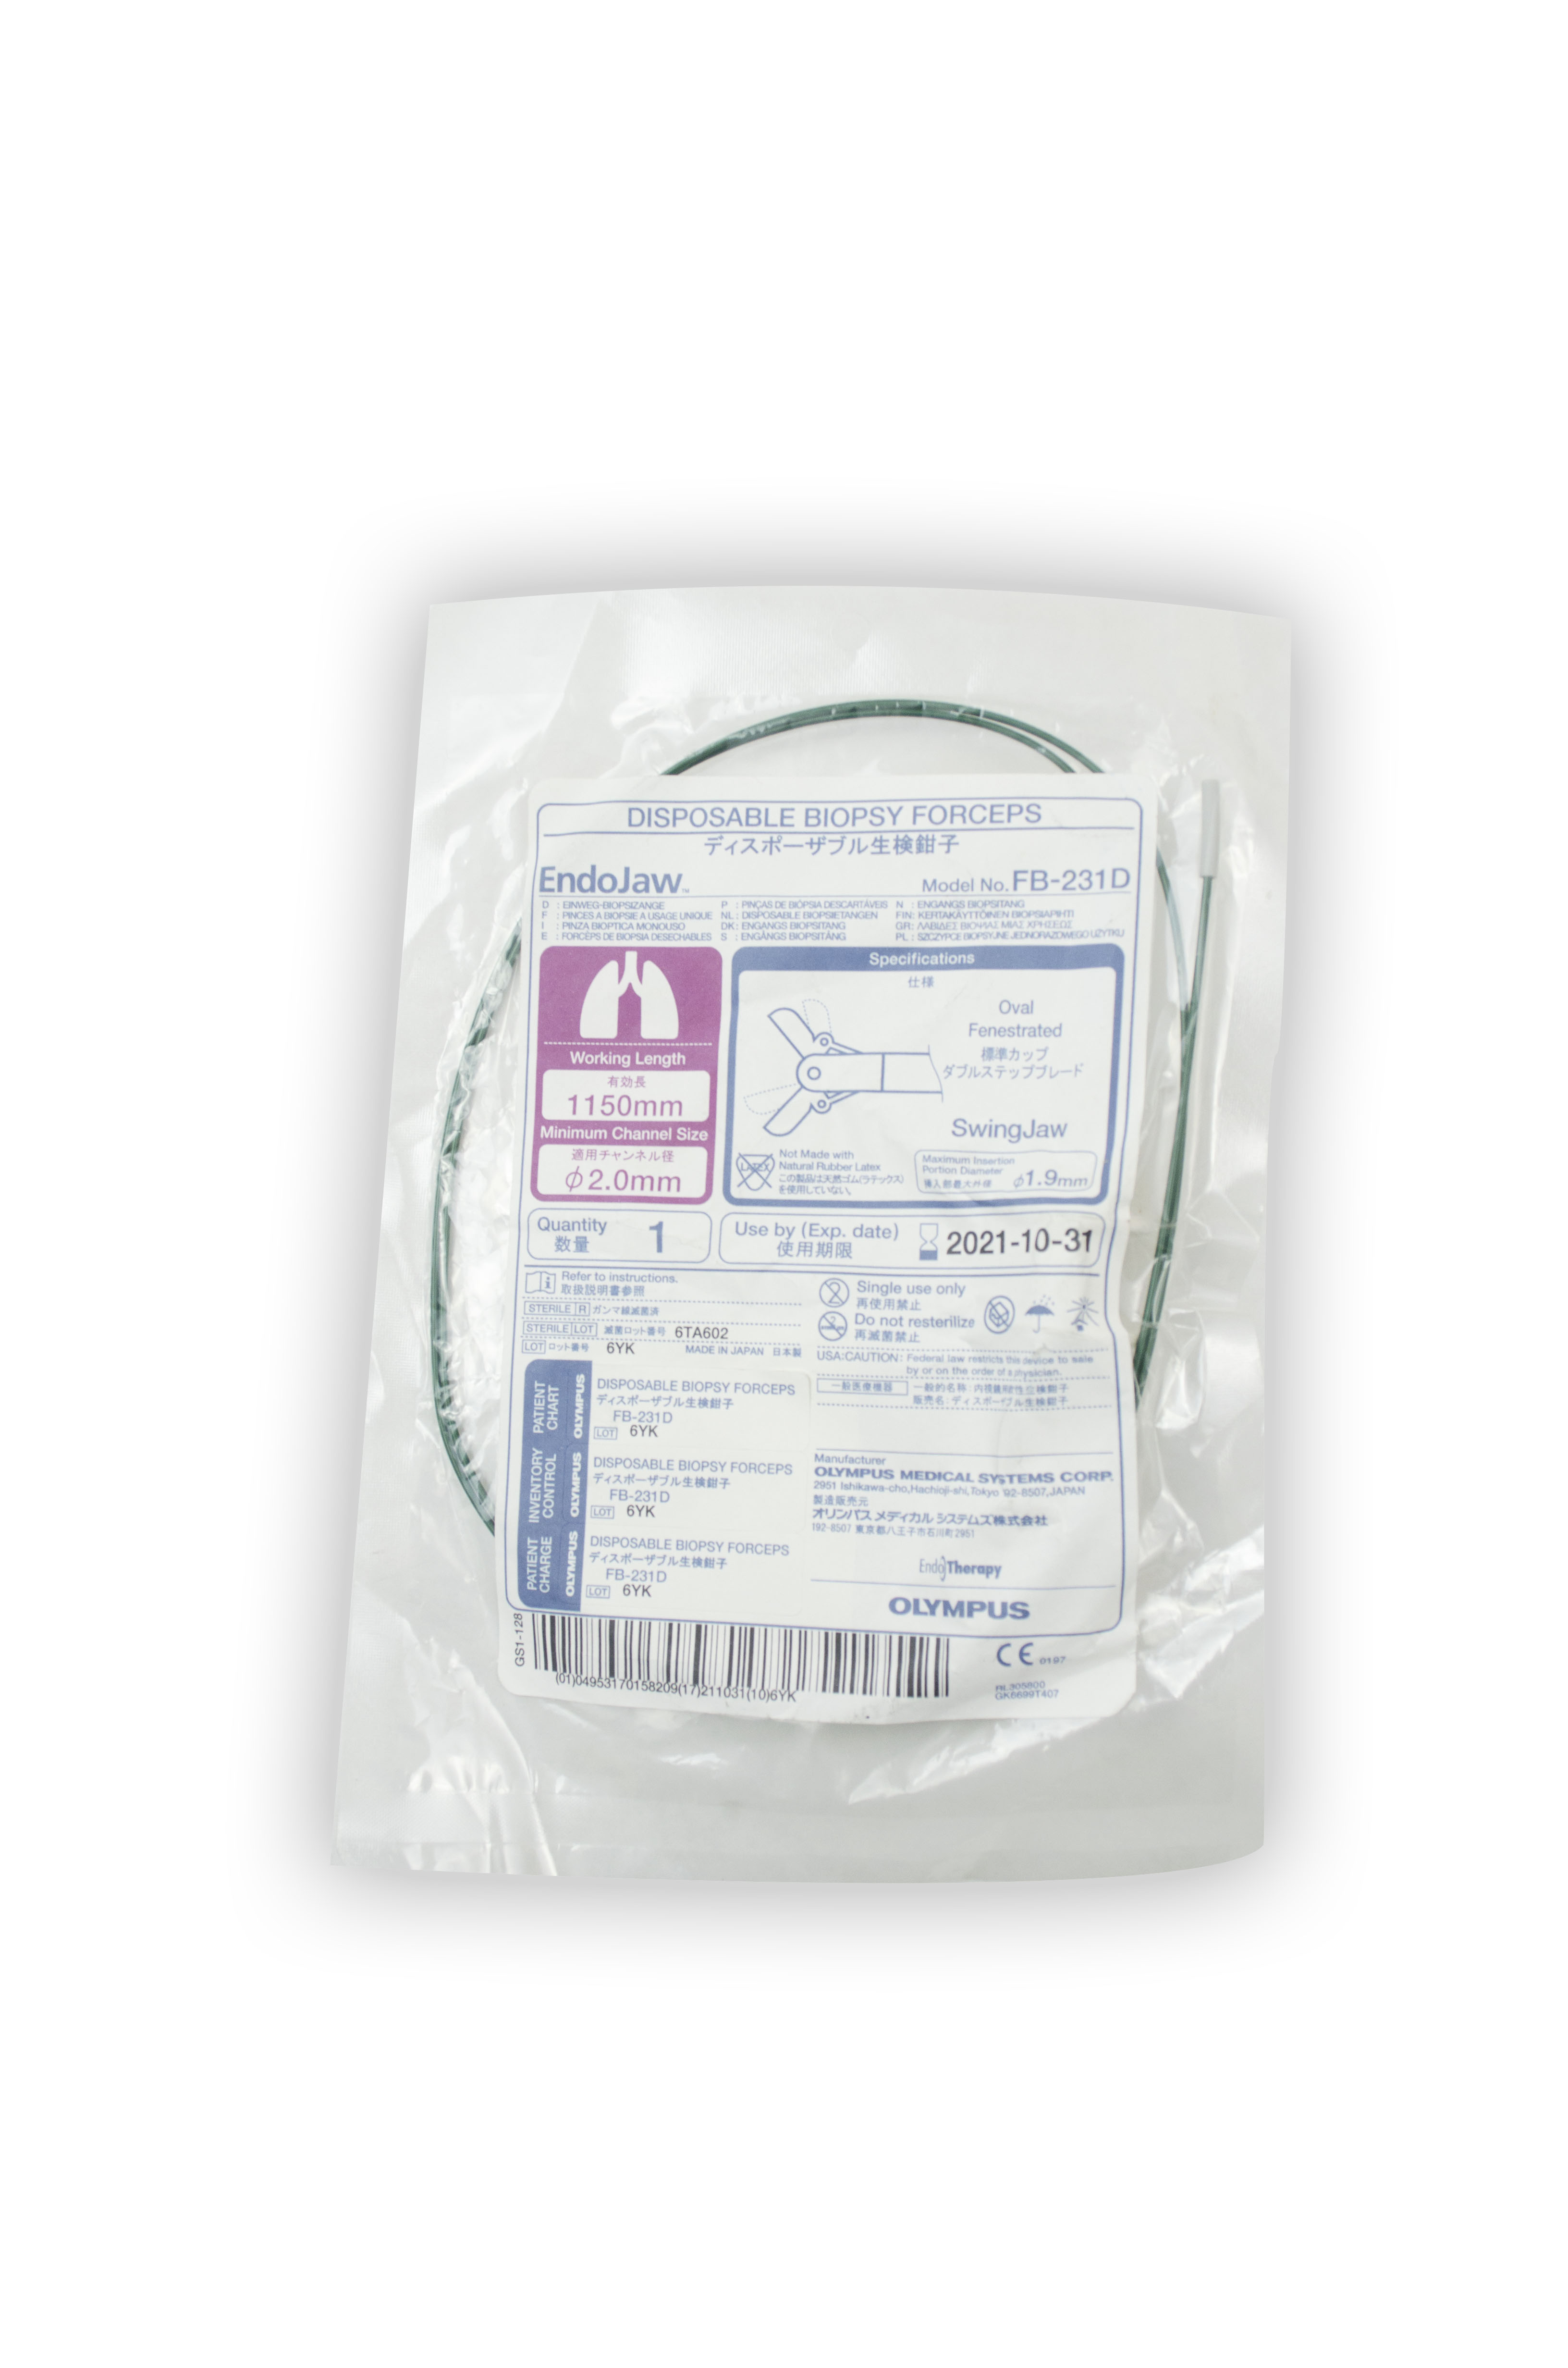 [In-Date] Olympus Disposable Biopsy Forceps - FB-231D (Original Packaging)